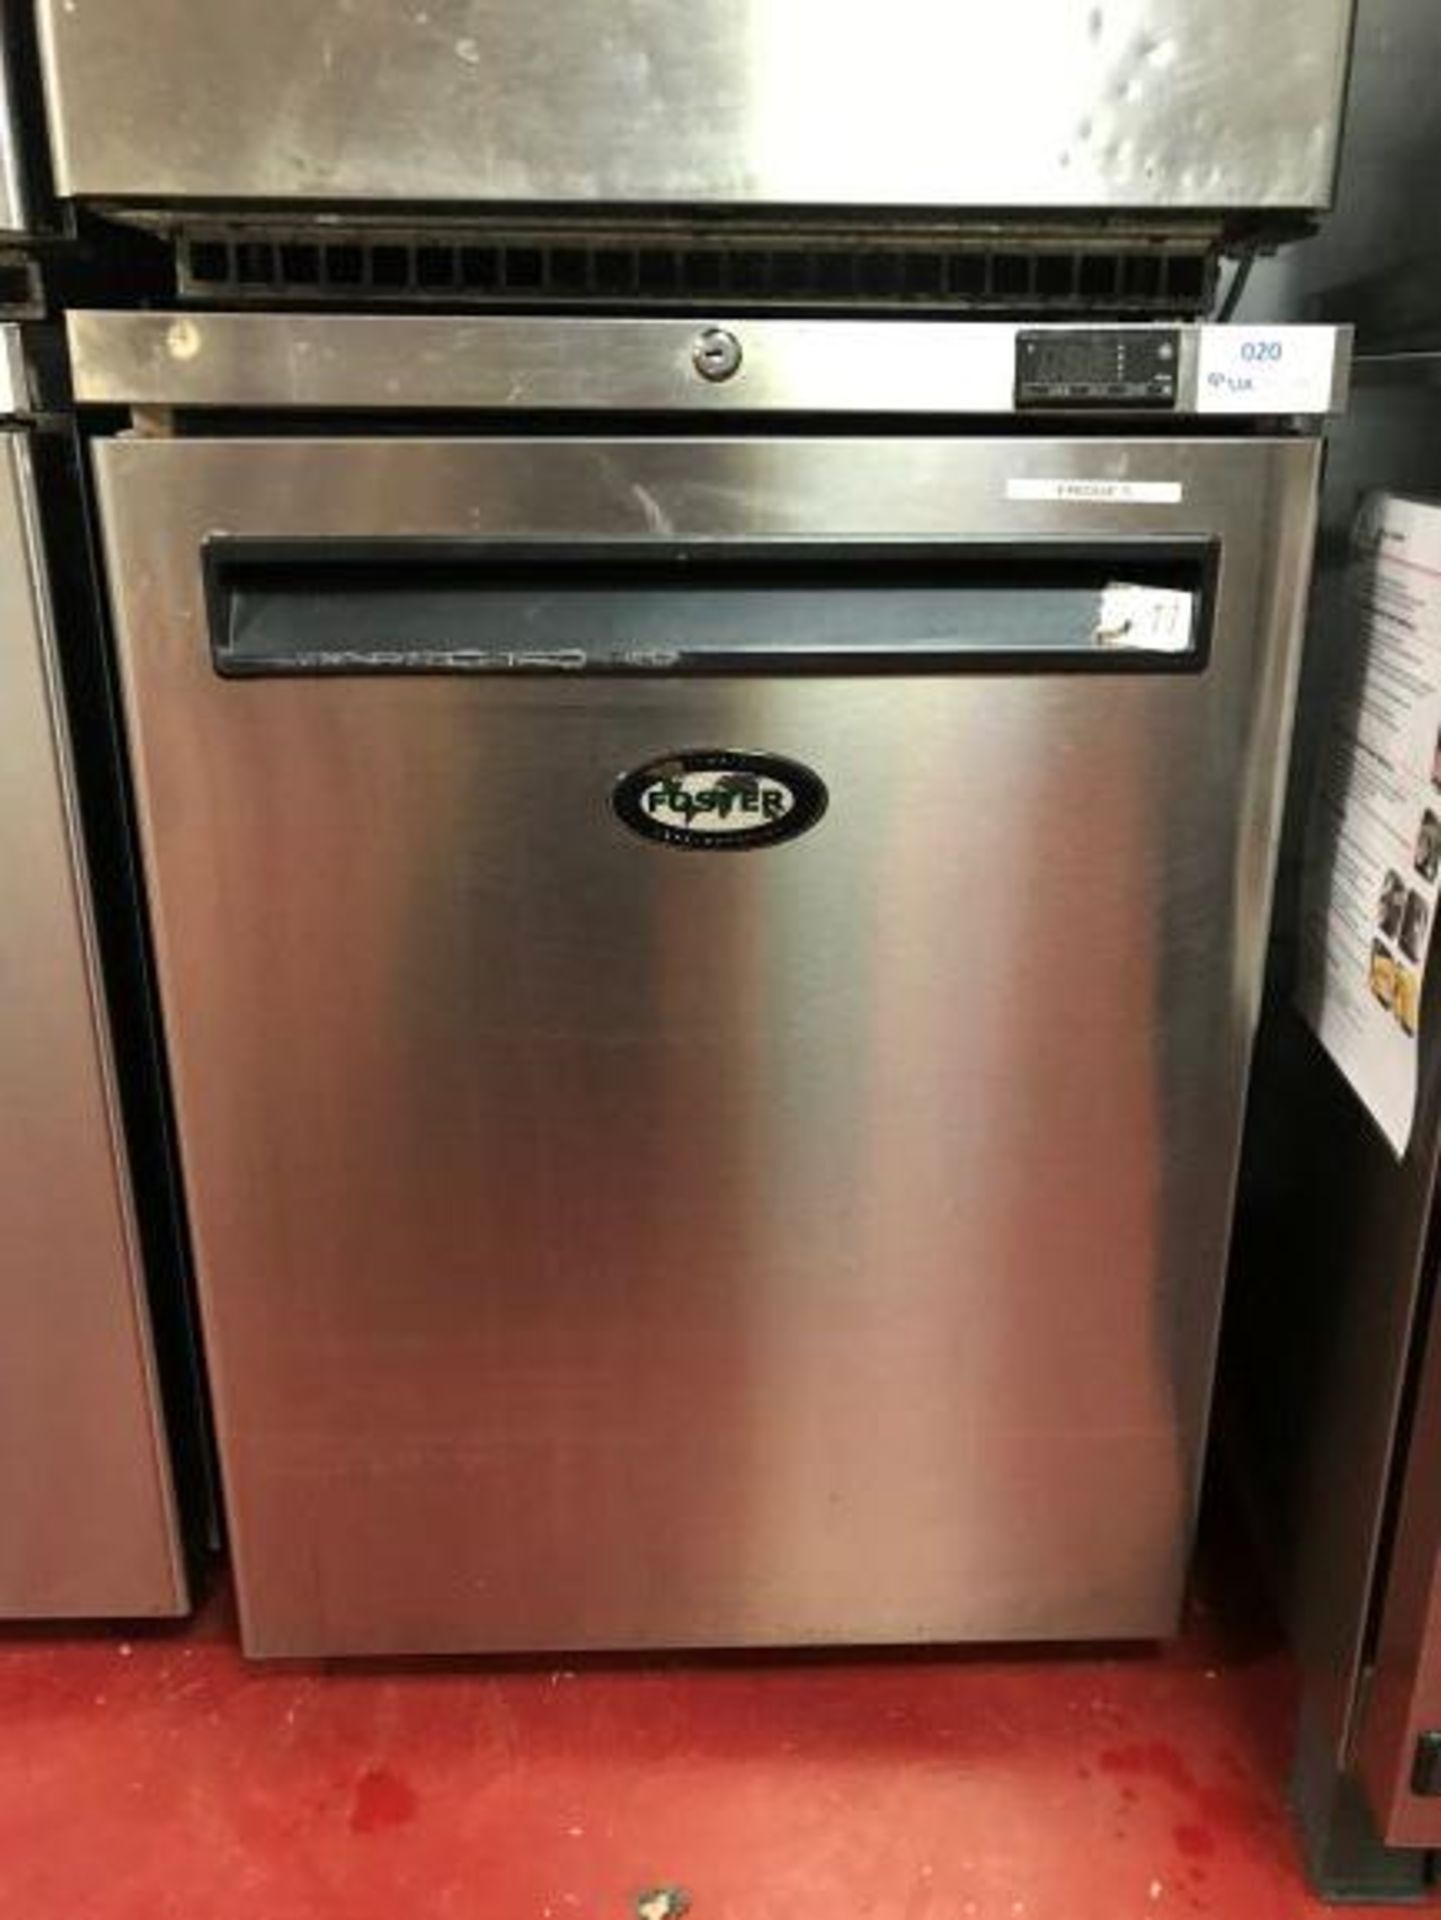 Foster Refrigeration HR150-A stainless steel single door under counter refrigerator